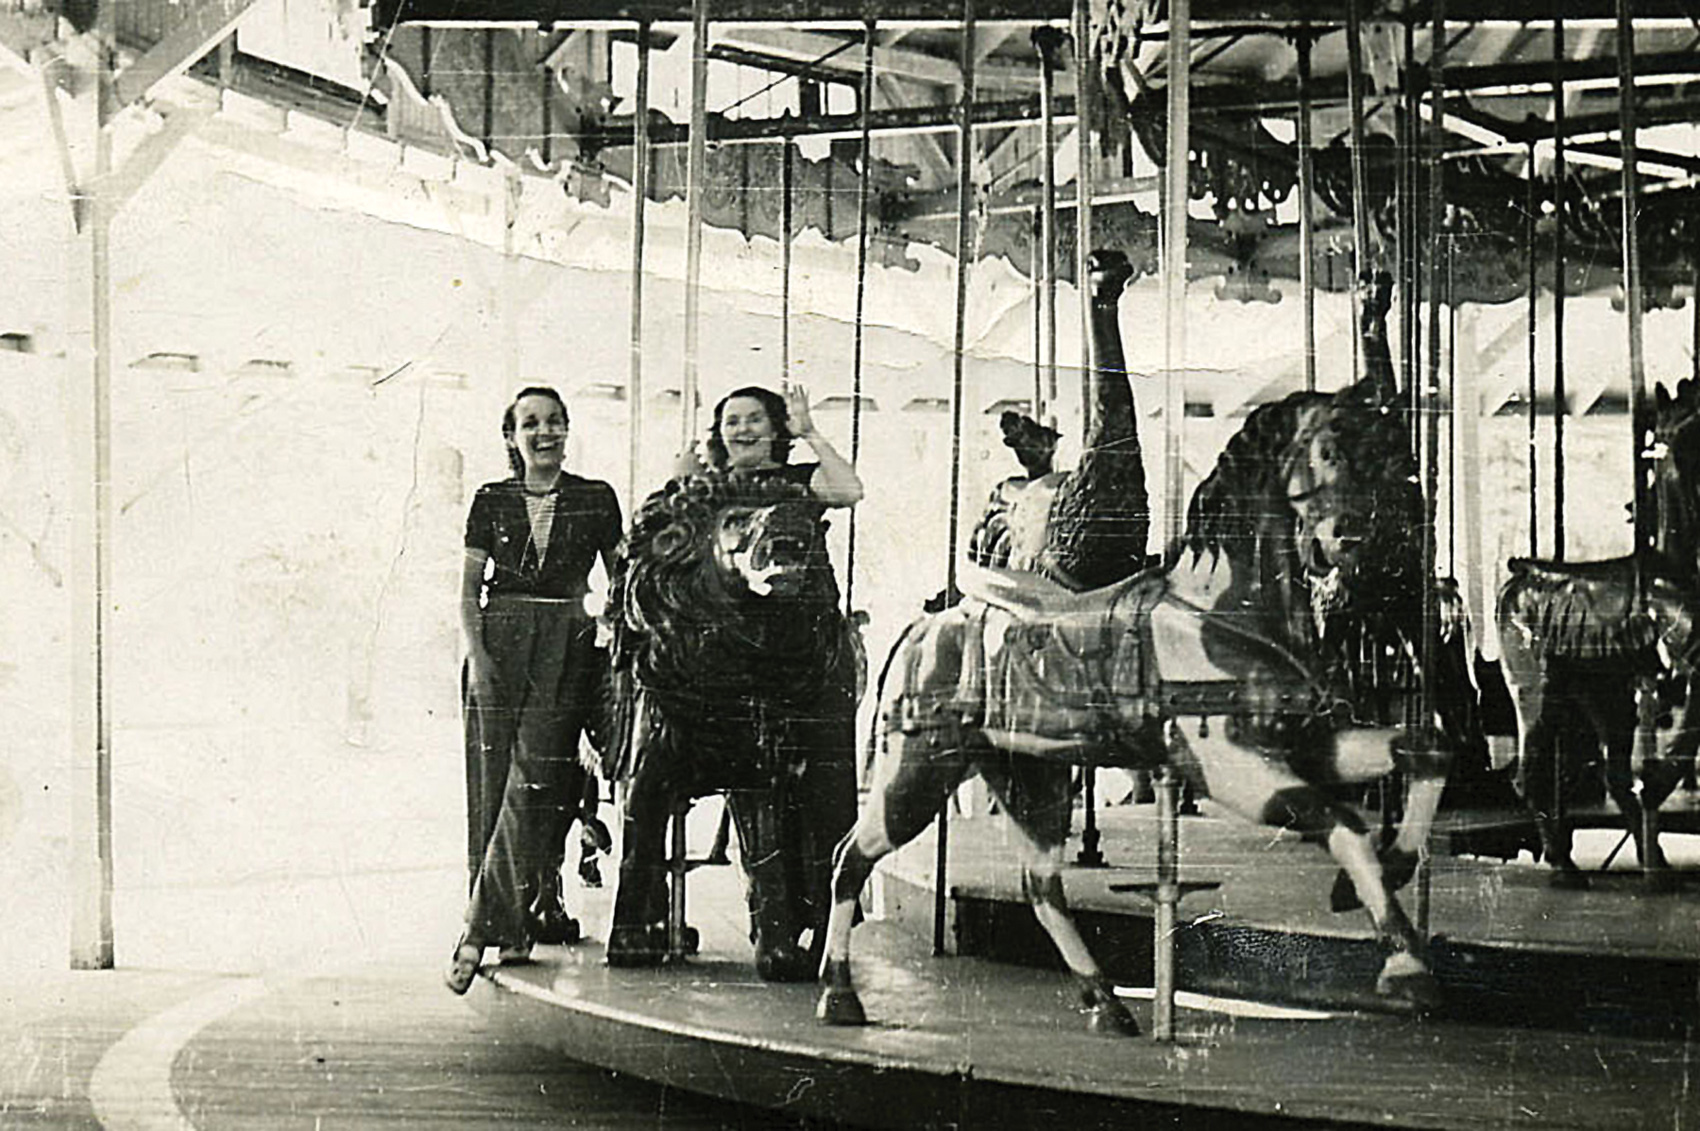 Dentzel-carousel-Tolchester-Park-MD-1950-photo-Chuck-Eckles